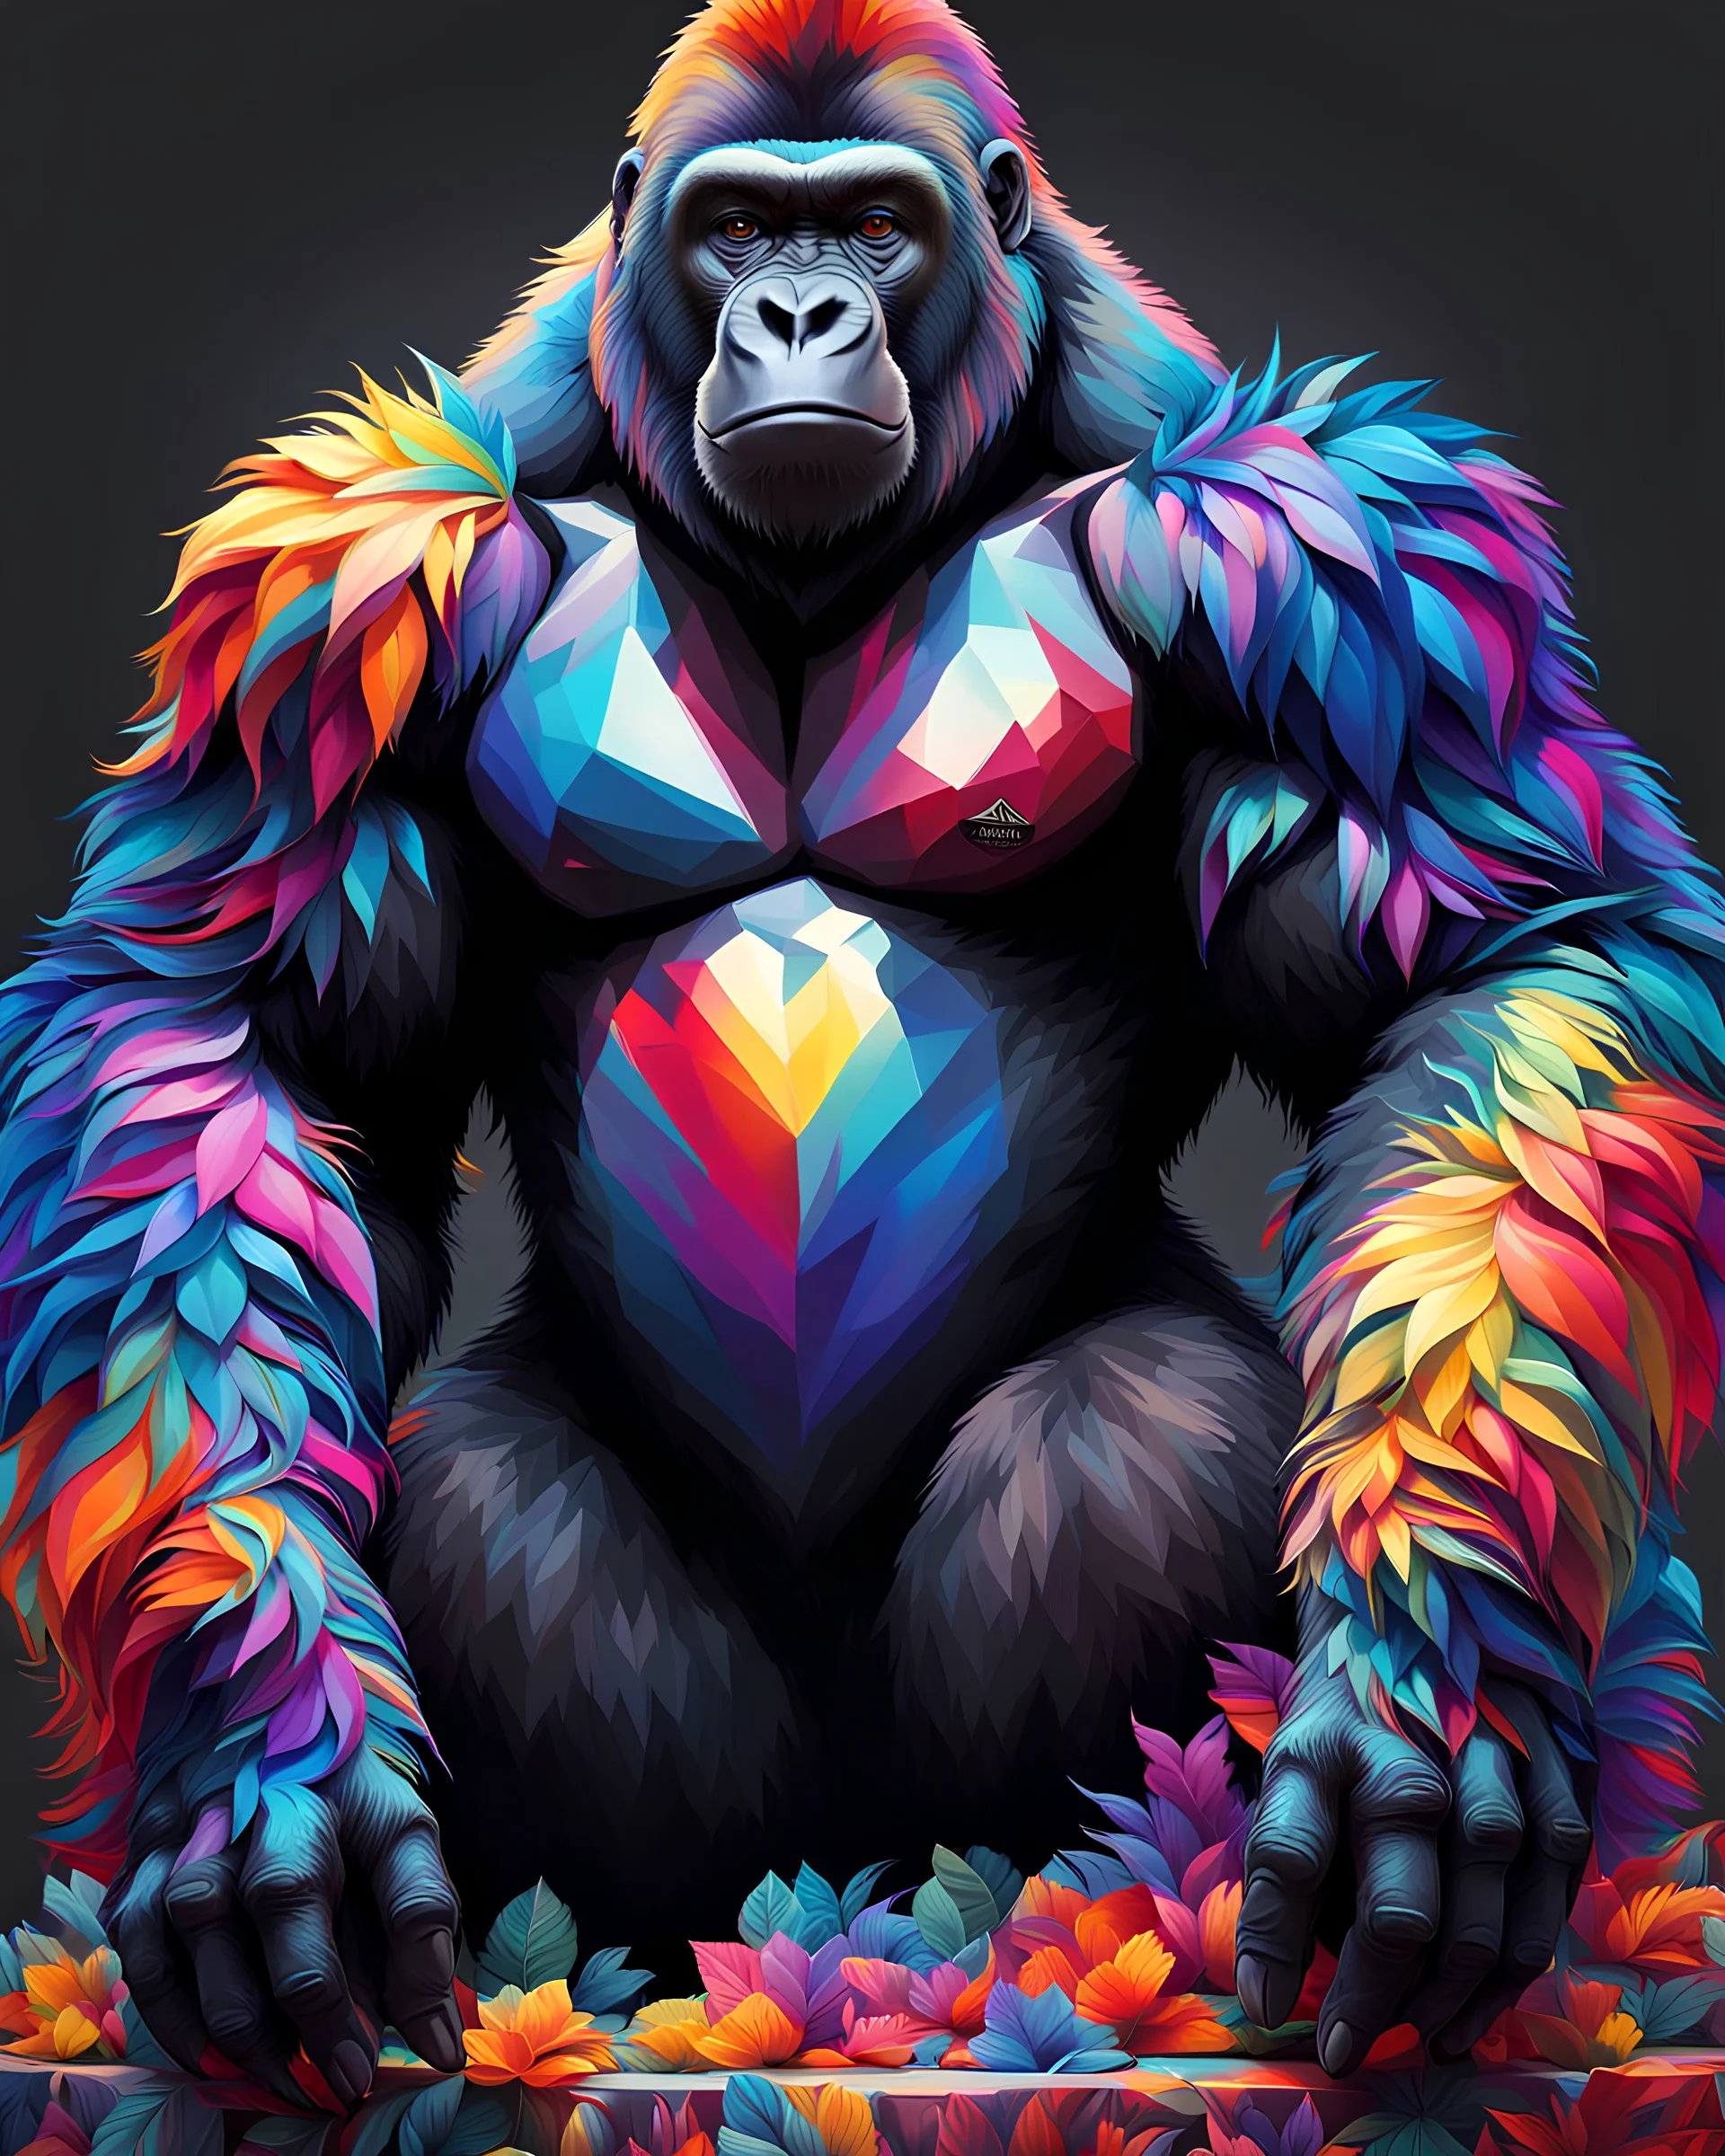 Full body Beautiful antropomorfico gorilla colorful art conceptual, amazing artwork, hyper detailed, ultra maximalist quality, 12k